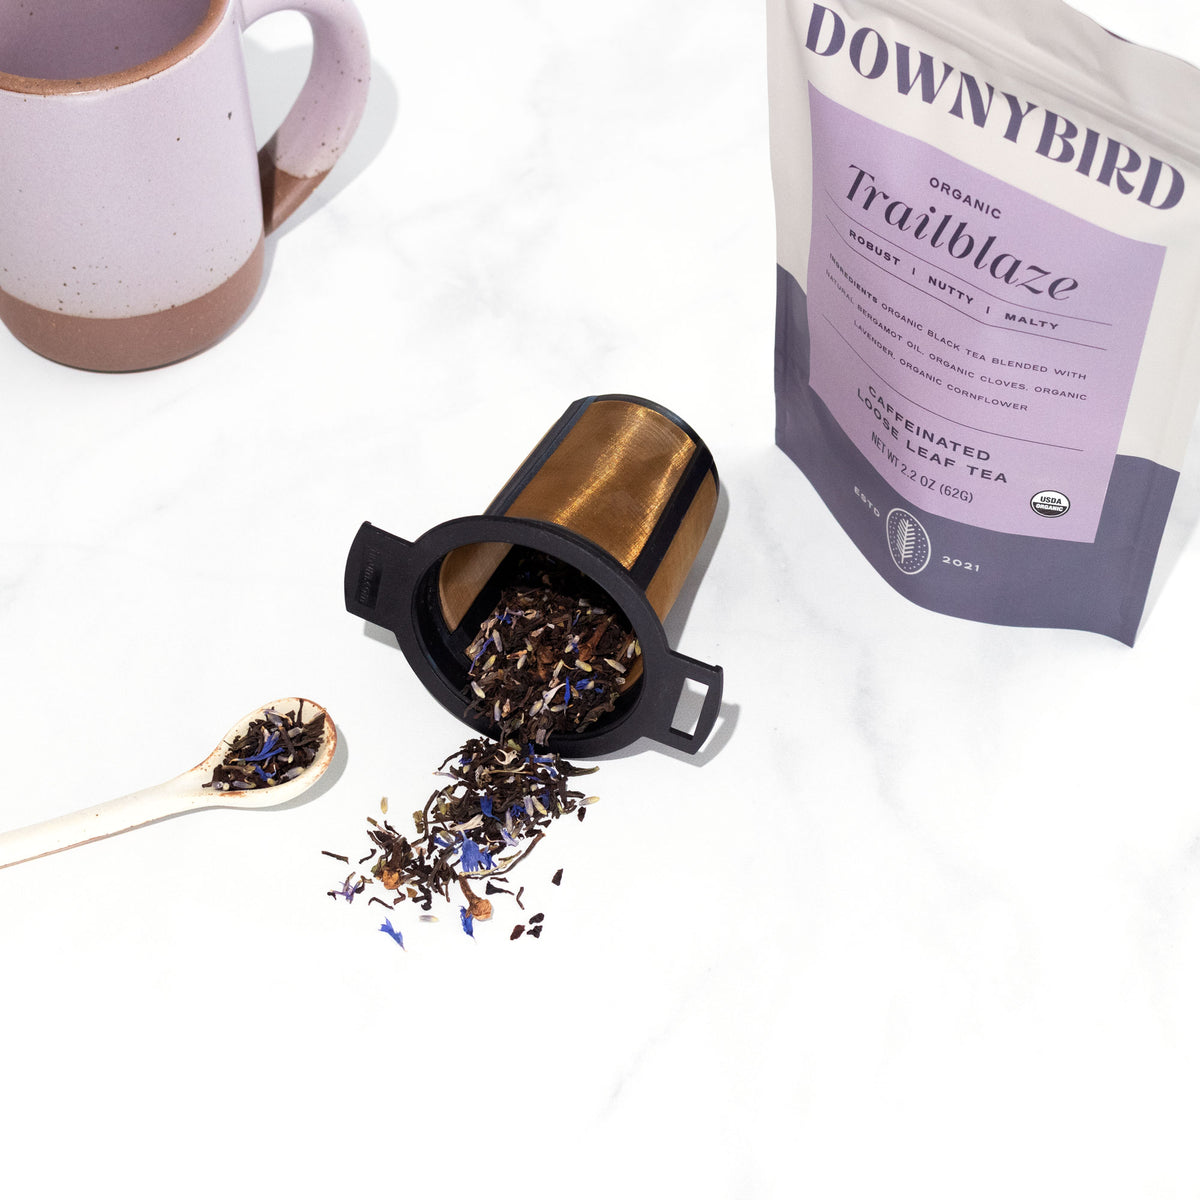 Finum Reusable Tea Brewing Basket with Downybird Trailblaze Organic Earl Grey Loose Leaf Tea